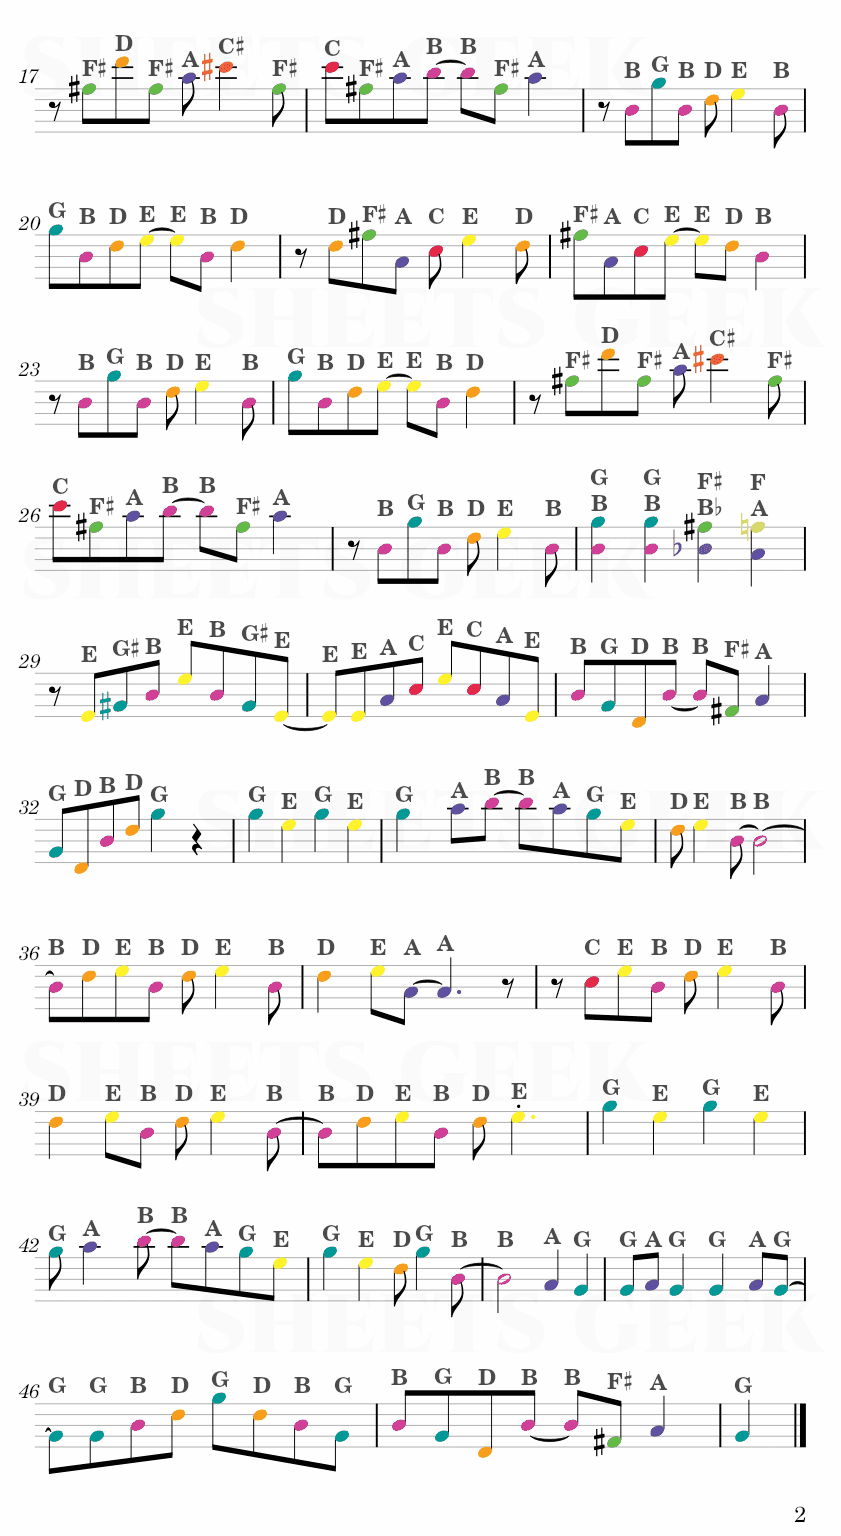 Maple Leaf Rag - Scott Joplin Easy Sheet Music Free for piano, keyboard, flute, violin, sax, cello page 2